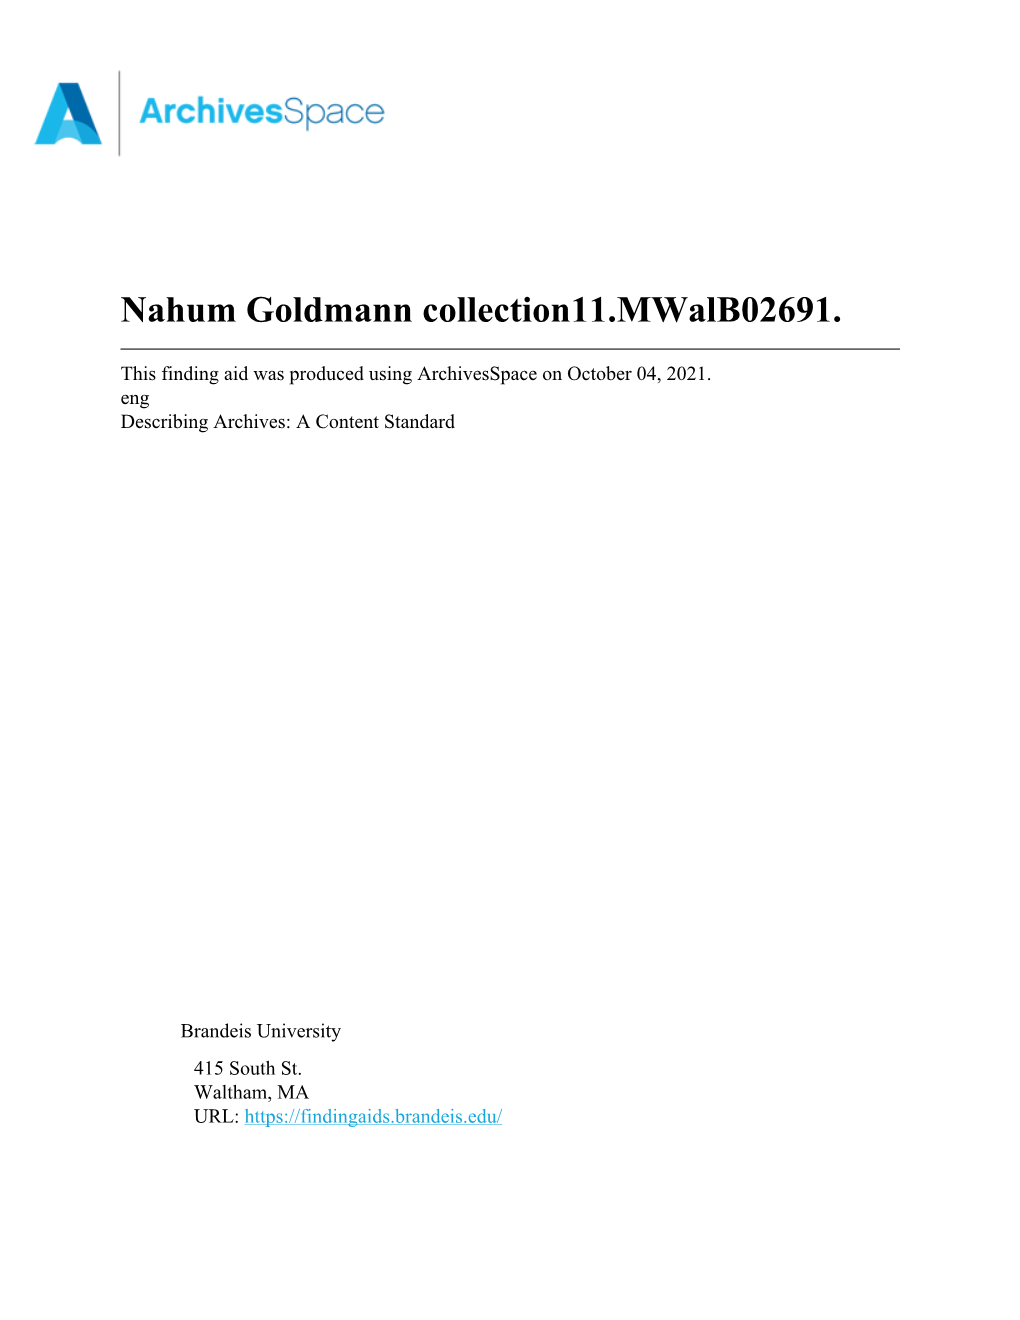 Nahum Goldmann Collection11.Mwalb02691